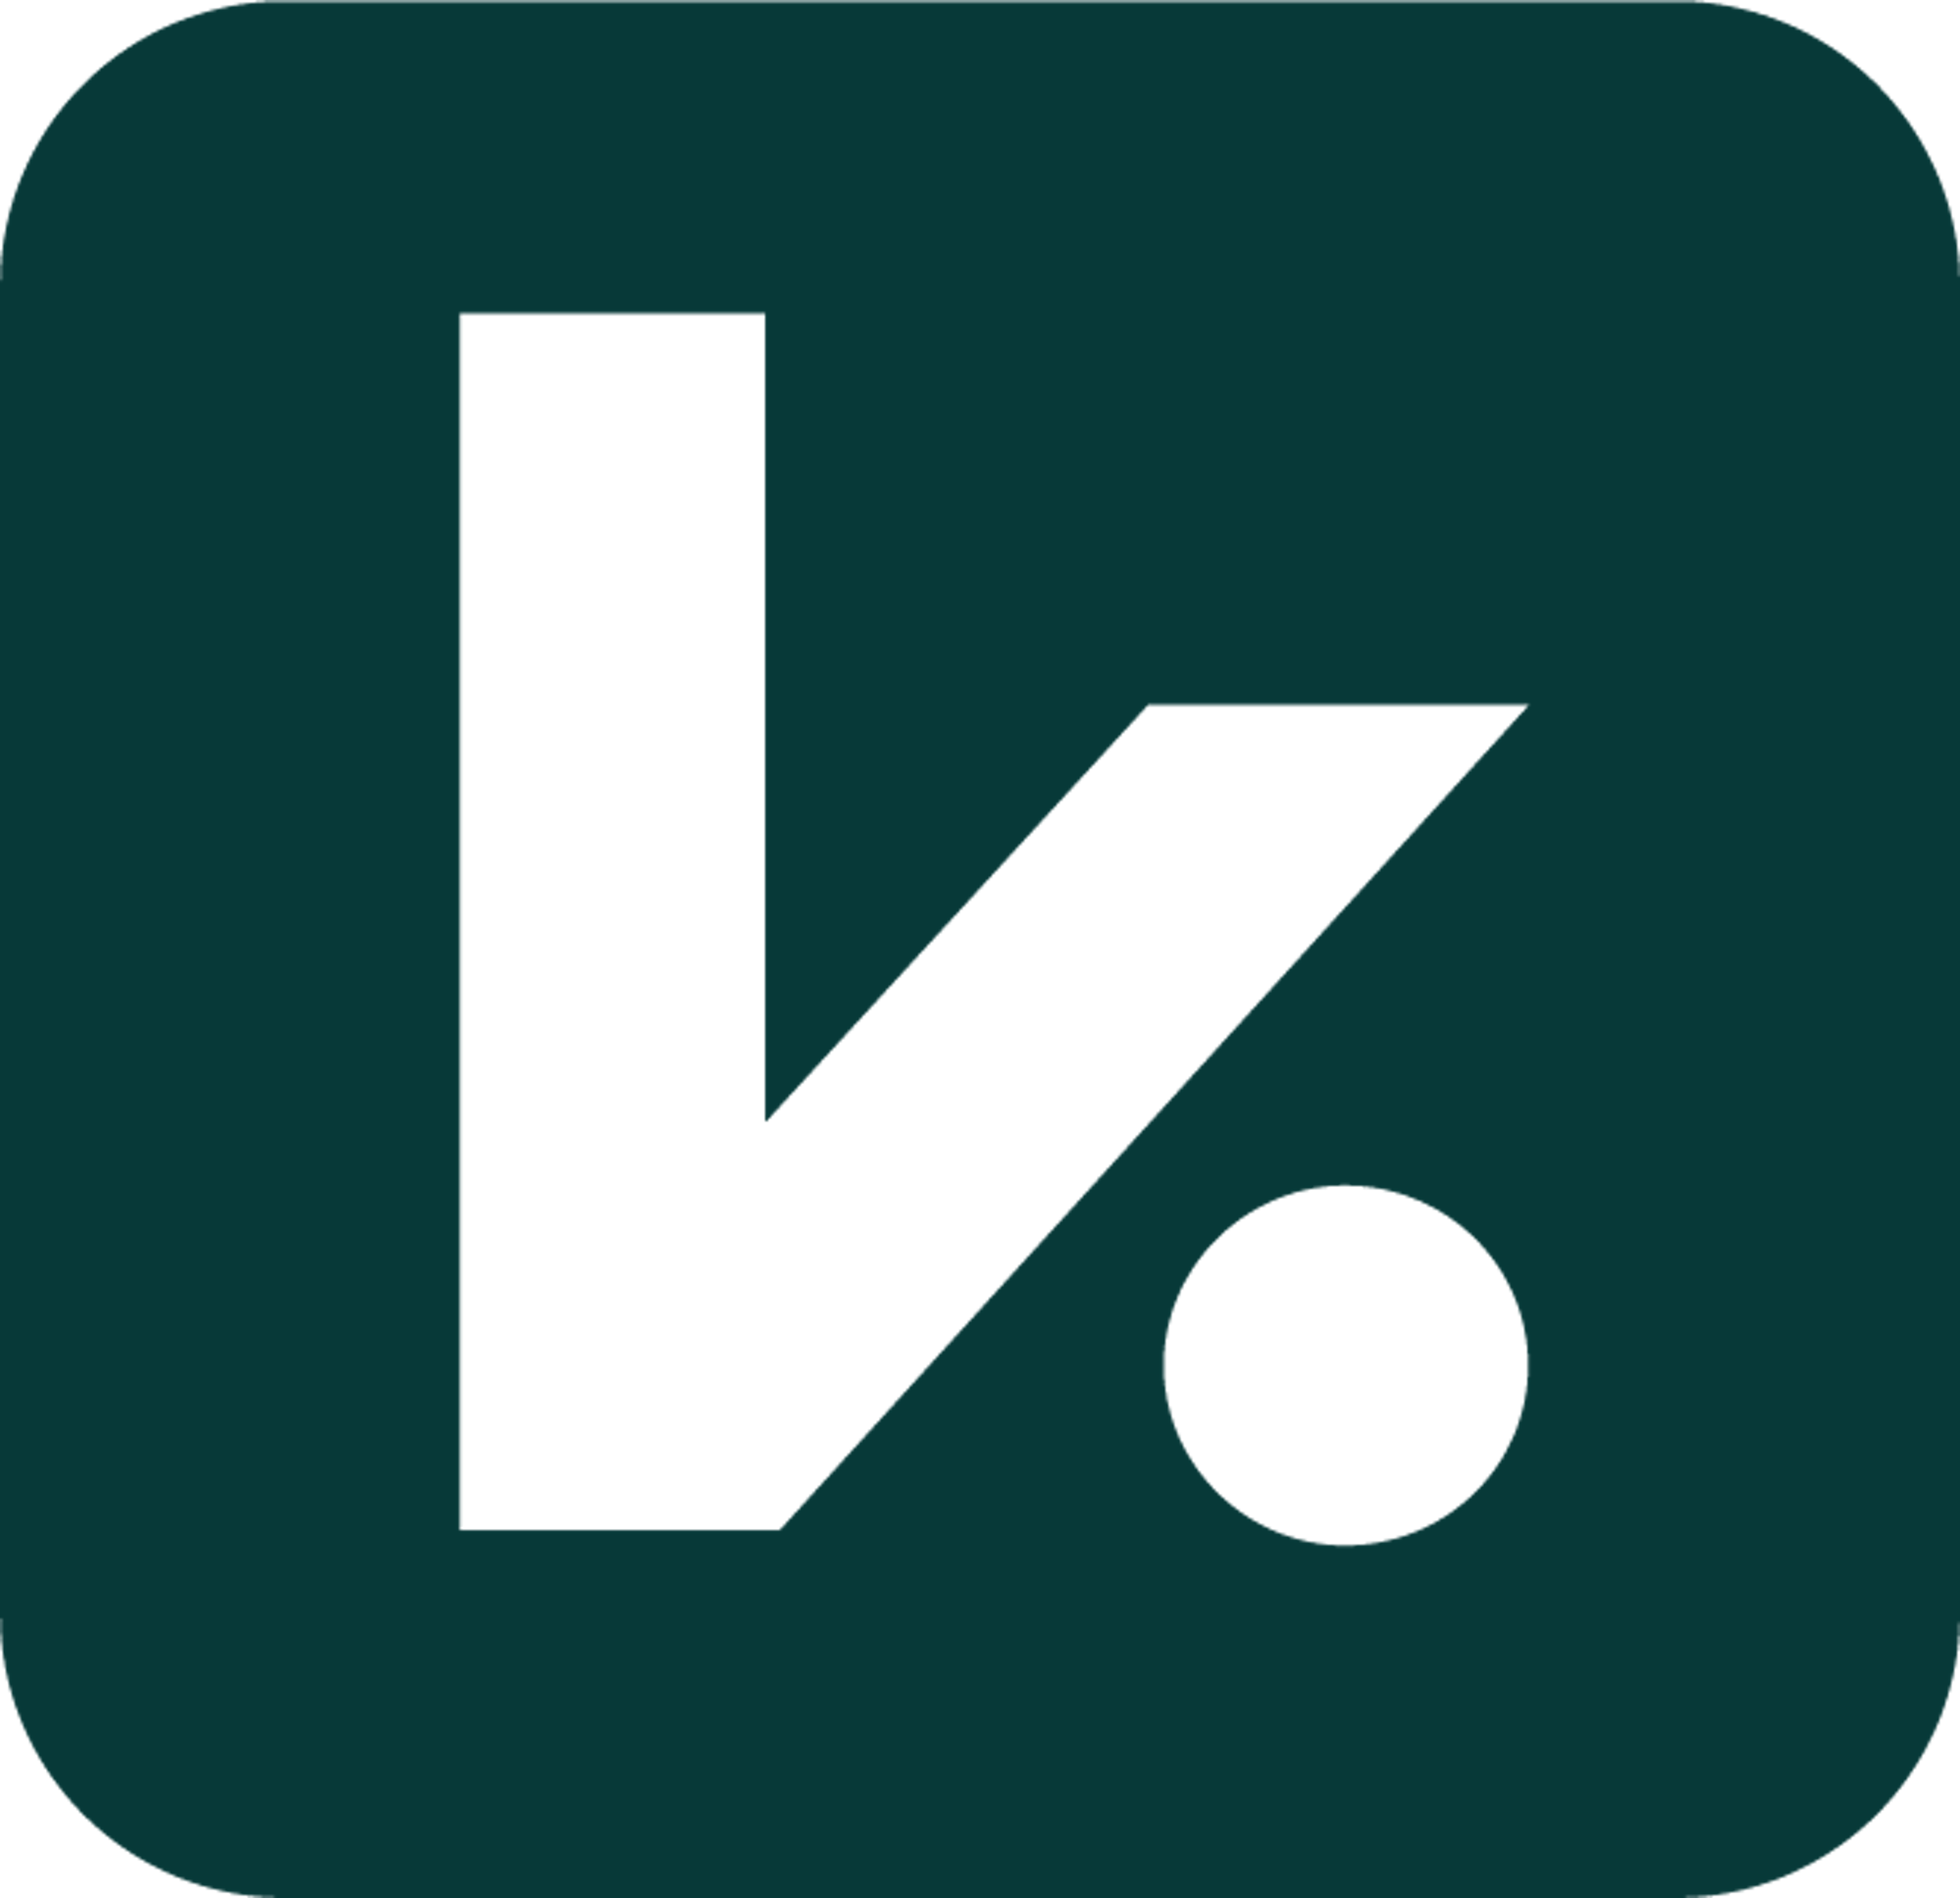 Kontainer Logo